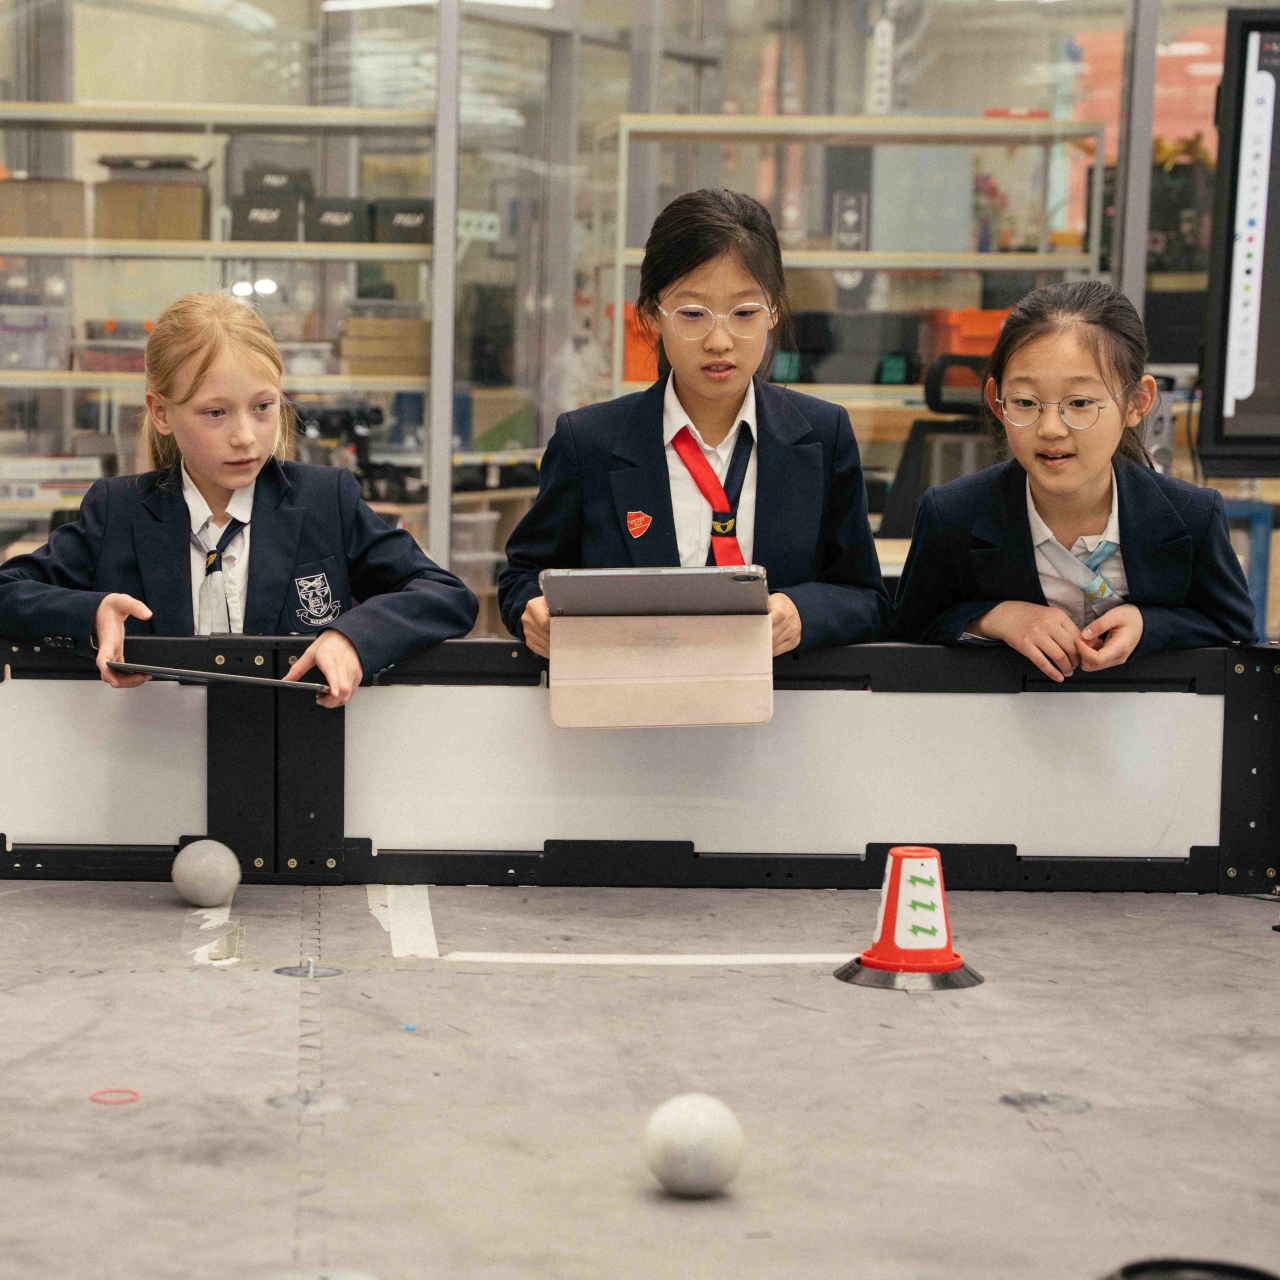 Pupils Showcase Creativity and Coding Skills with the Sphero BOLT Coding Robot Kit